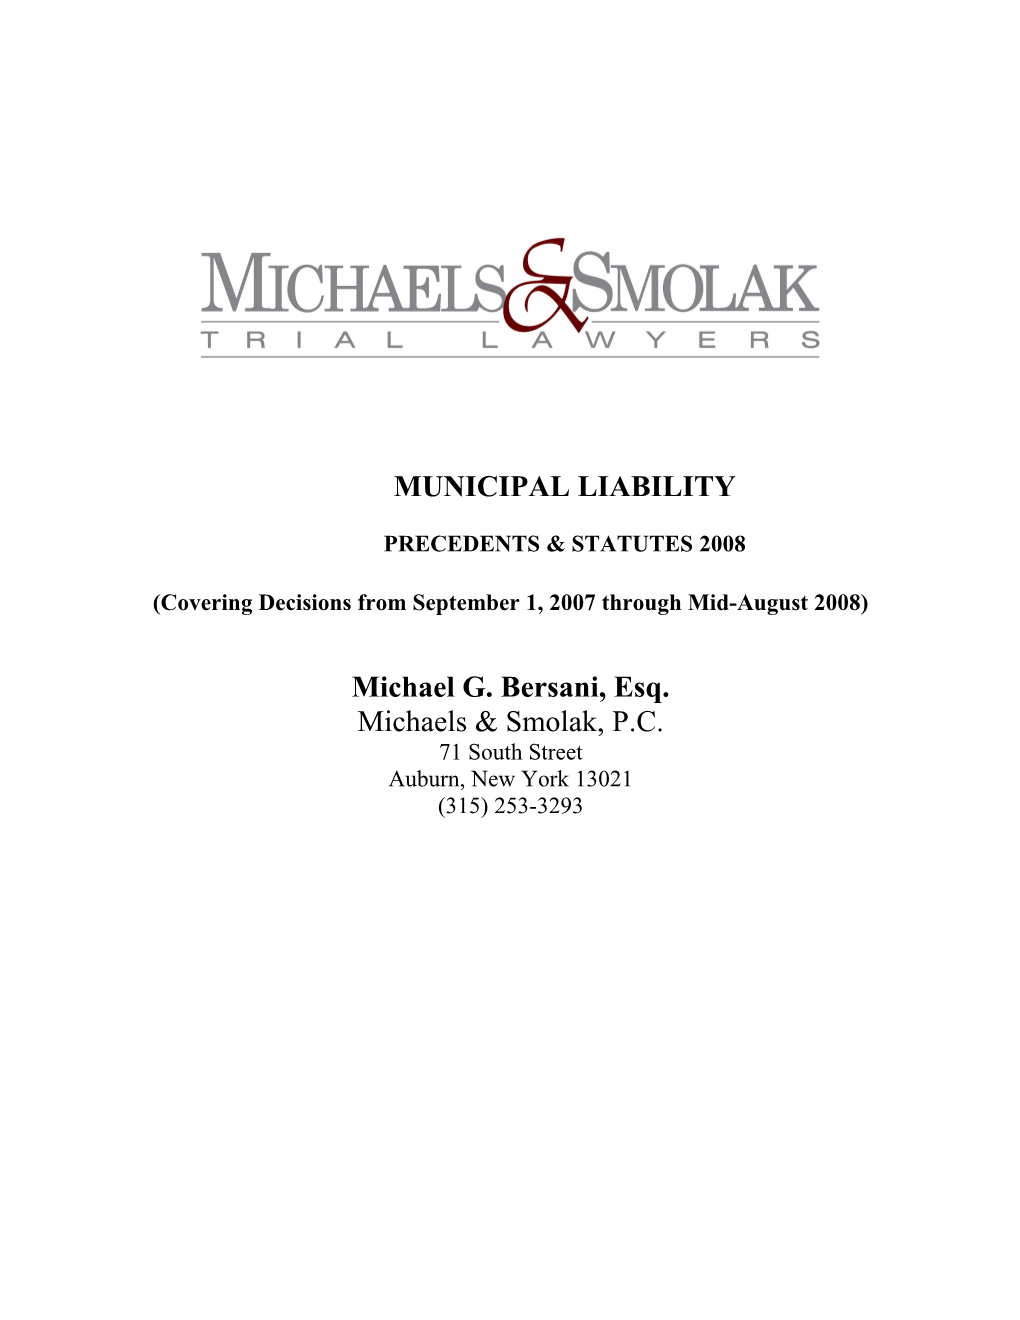 Municipal Liability Precedents & Statutes 2008